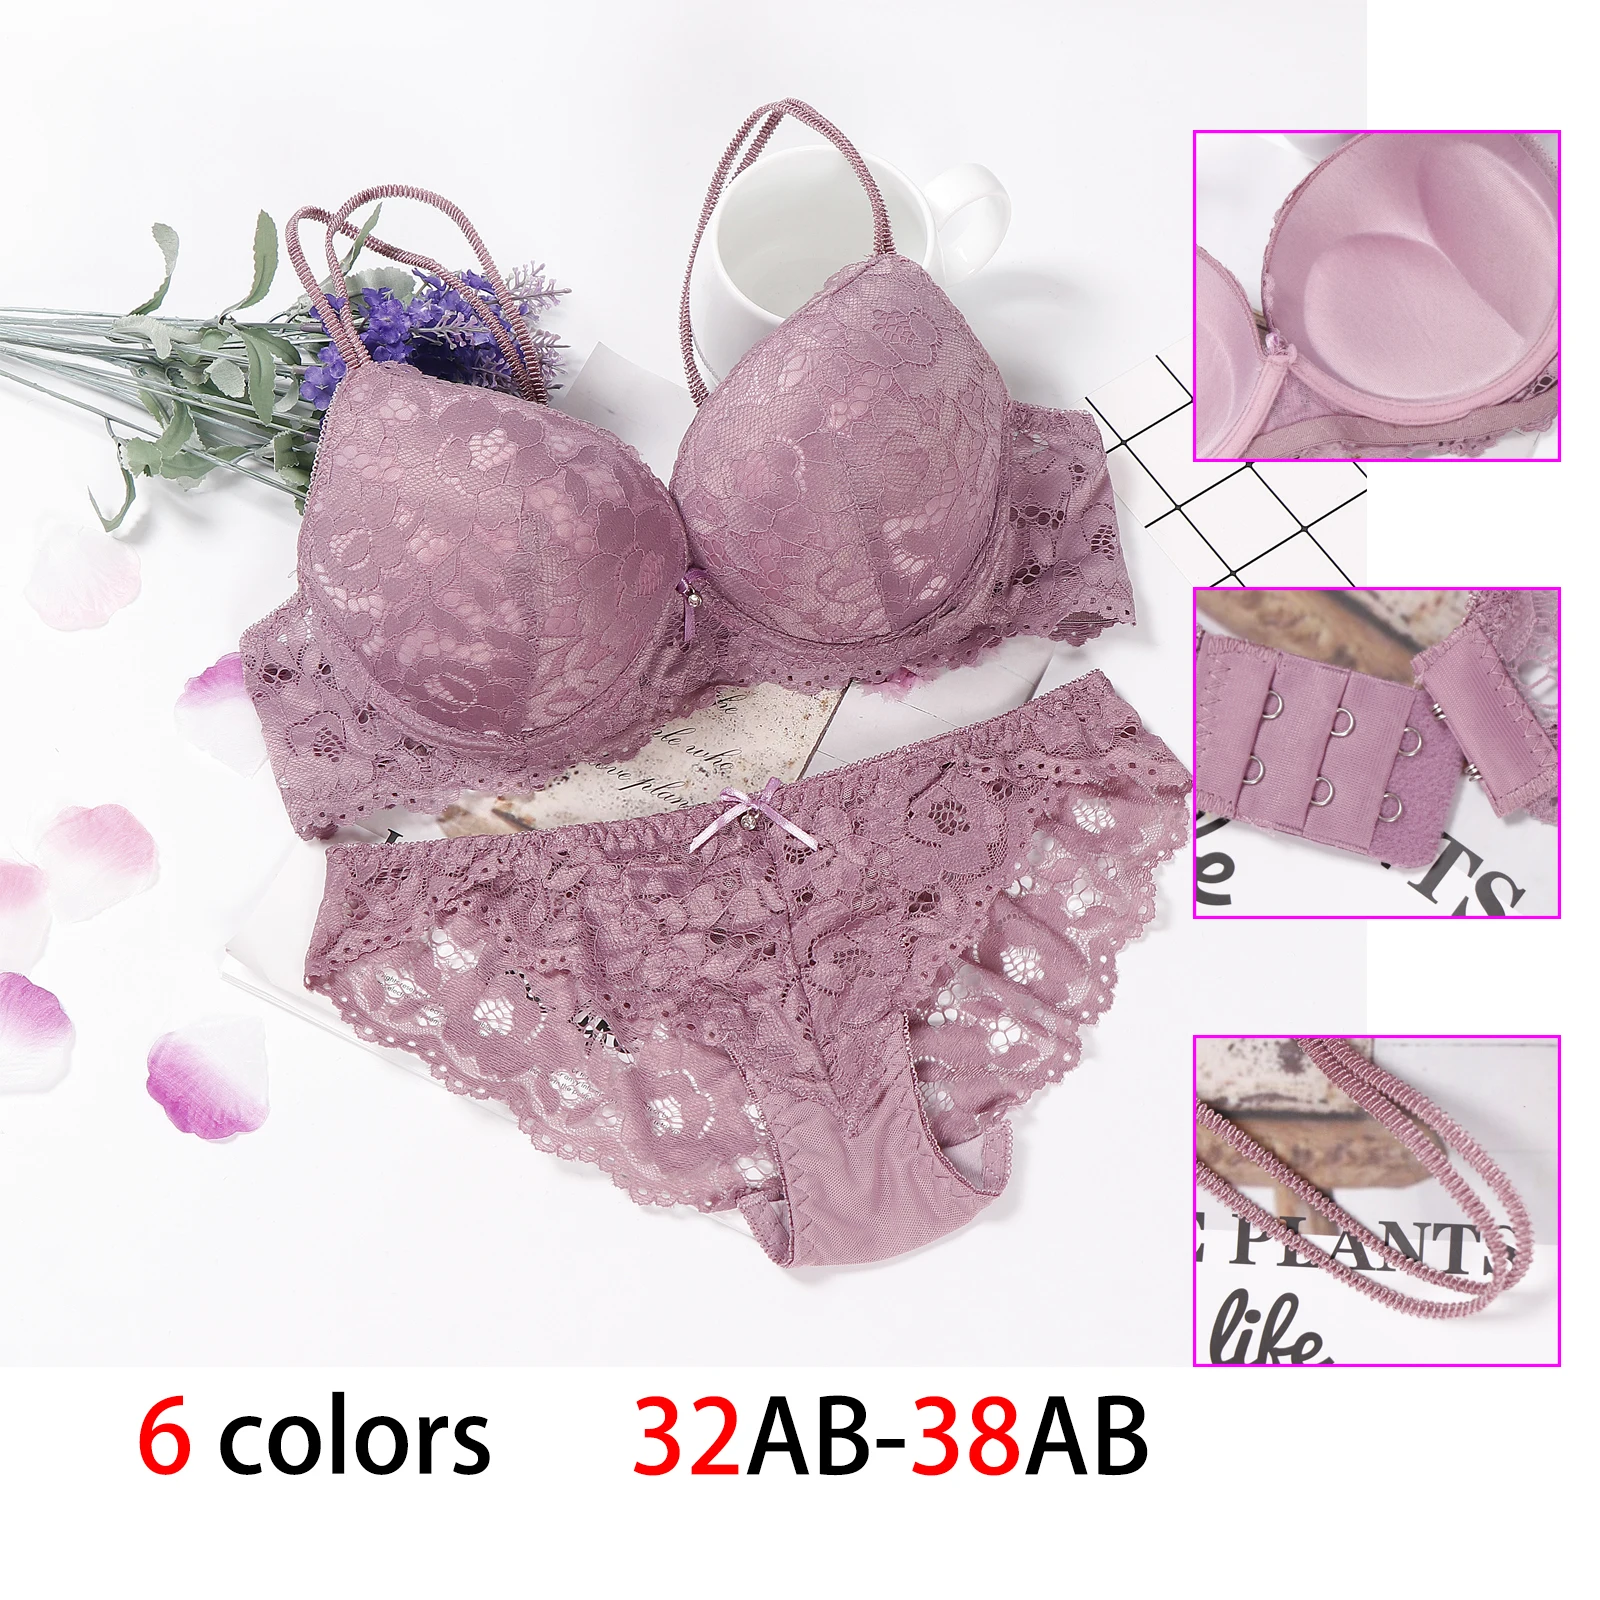 Lingerie Underwear Women Set trasparente Bra and Panty Set Pink lace Set